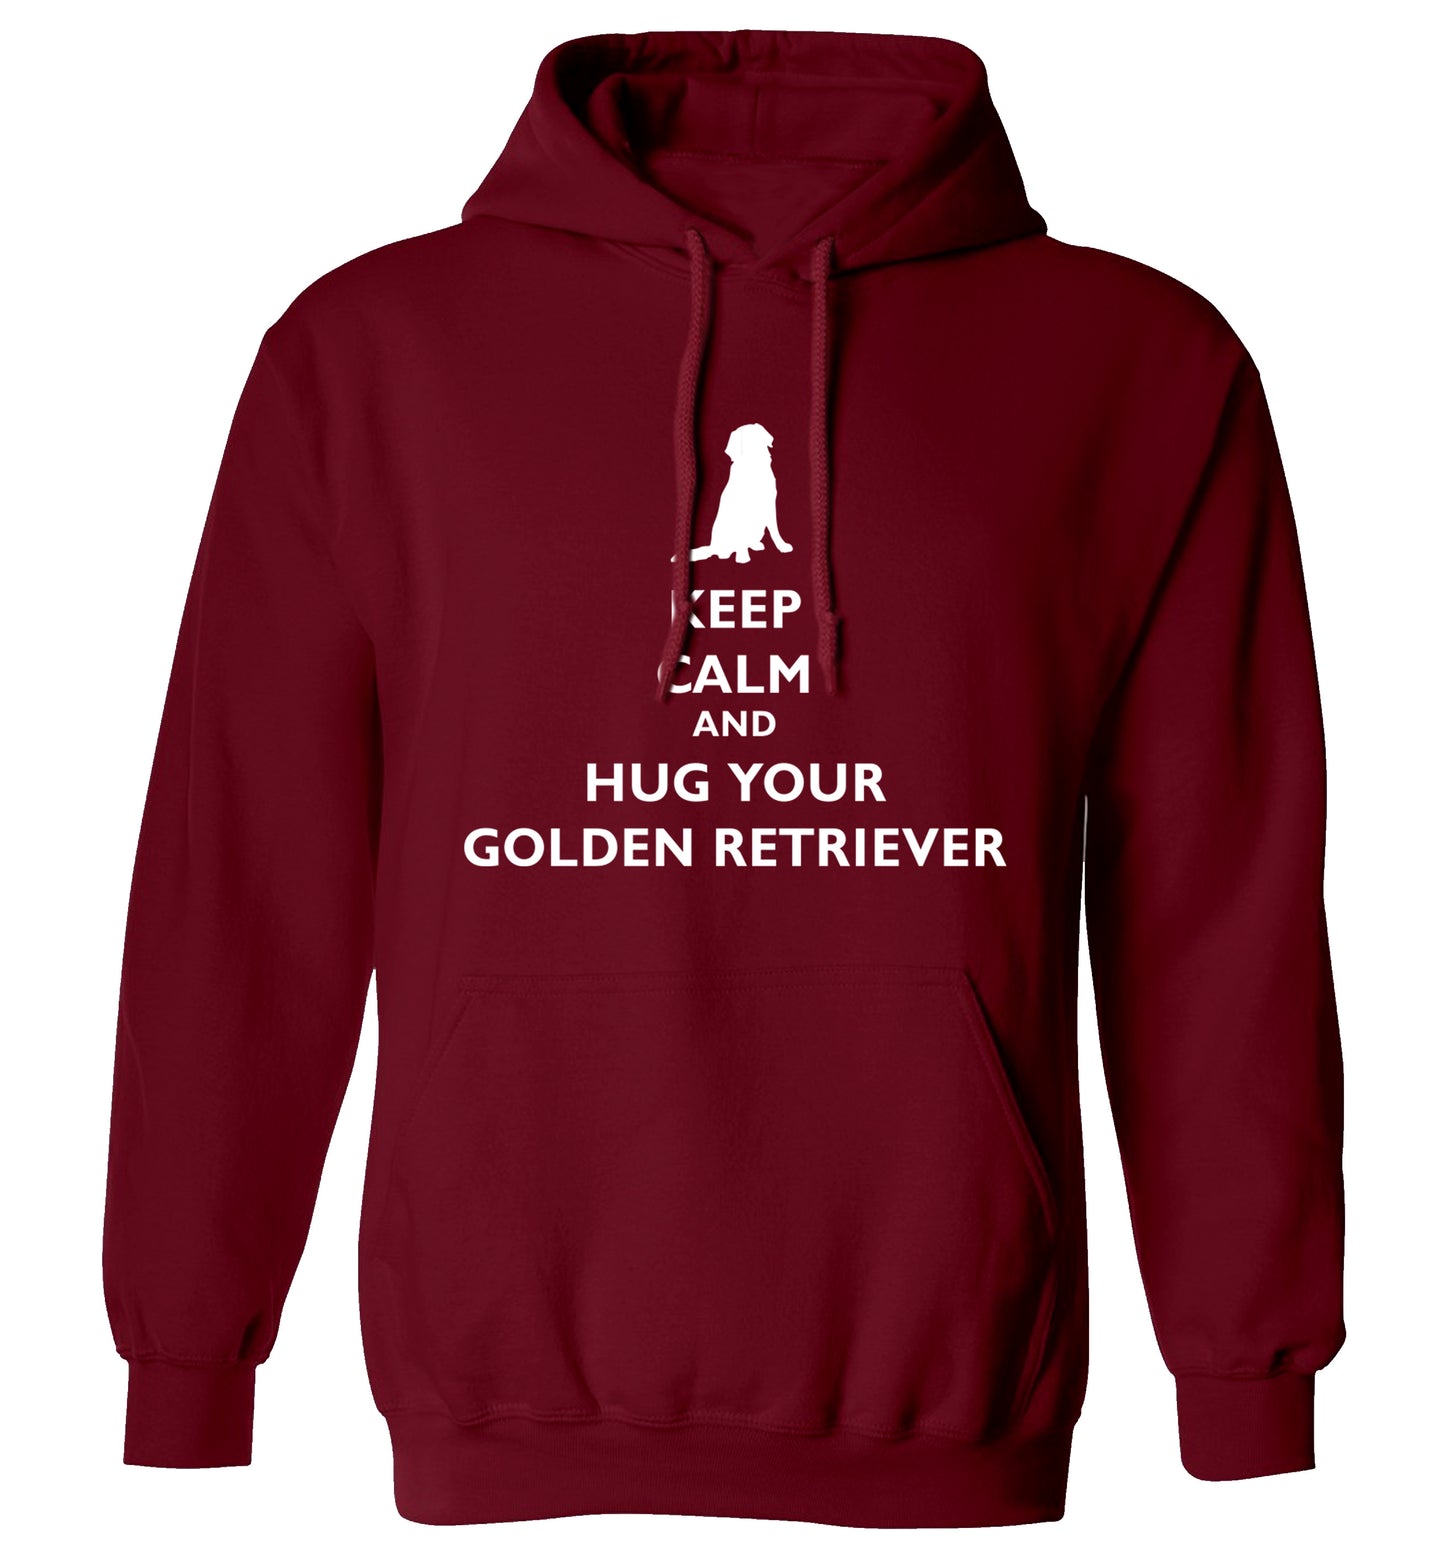 Keep calm and hug your golden retriever adults unisex maroon hoodie 2XL